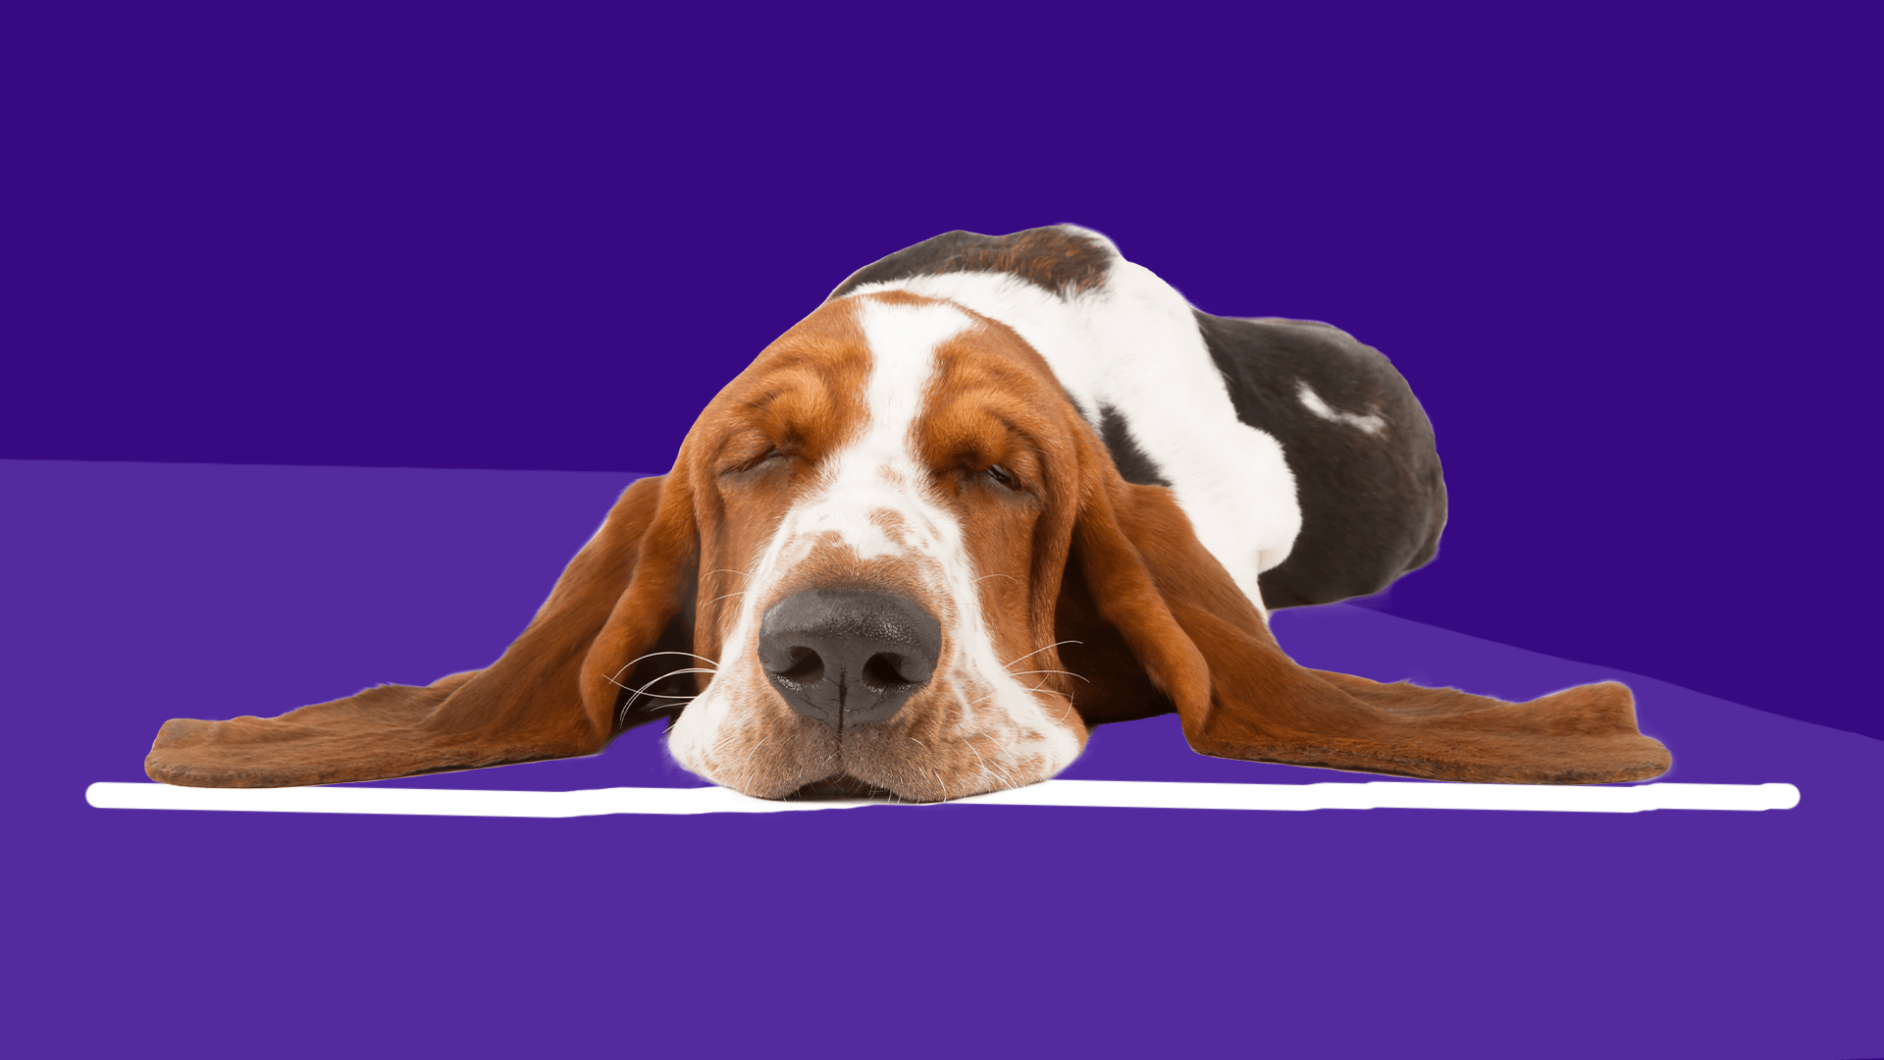 Sleeping hound dog: Dog diarrhea